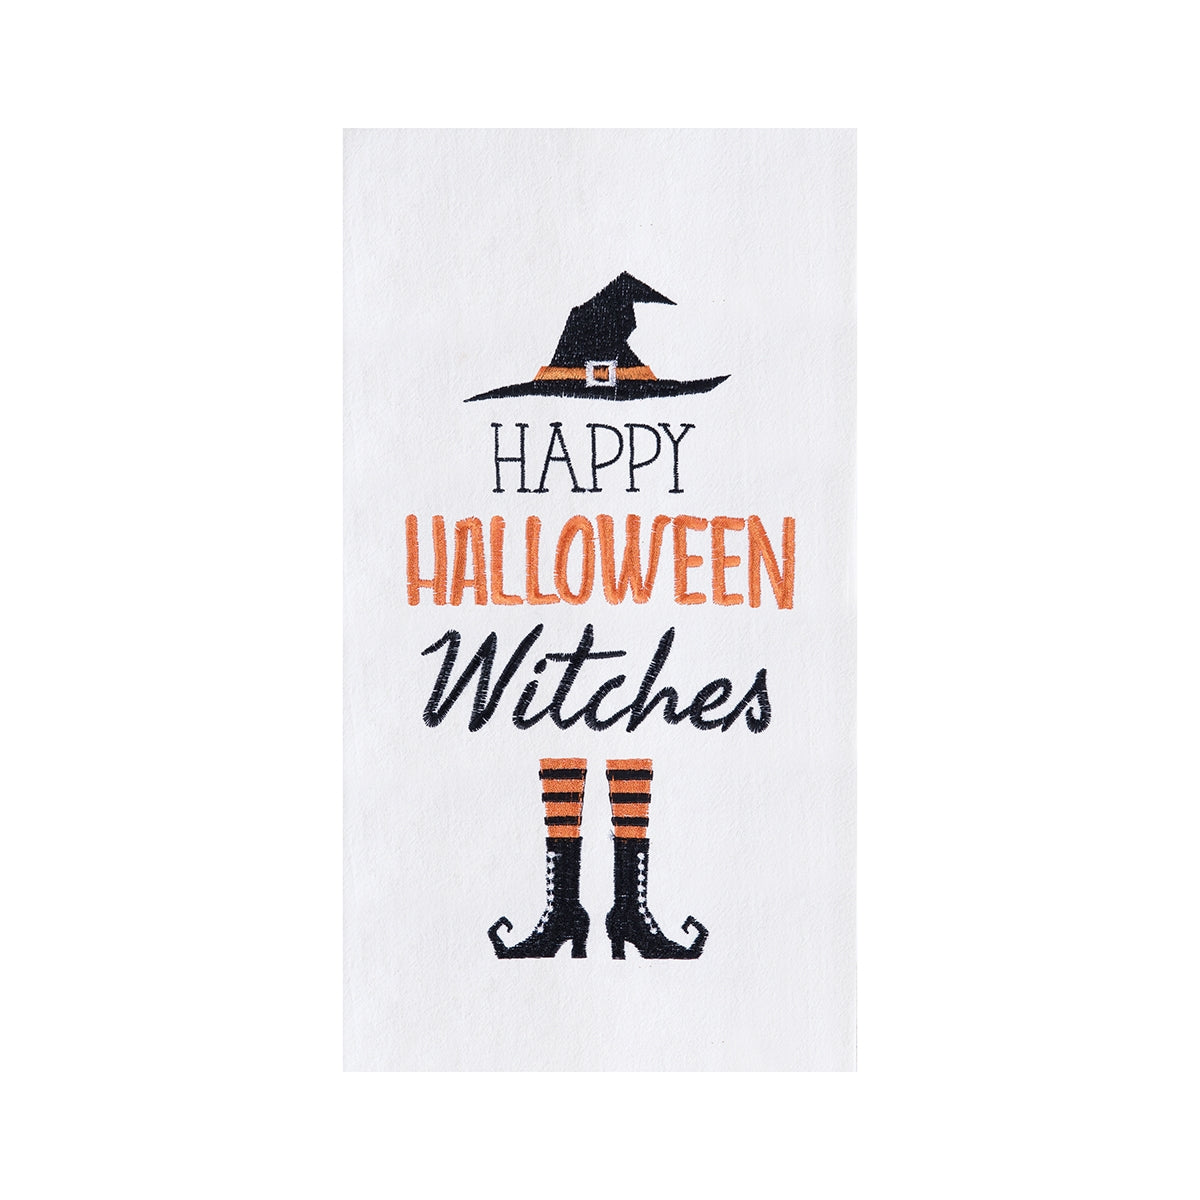 Happy Halloween Witches - Kitchen Towel    